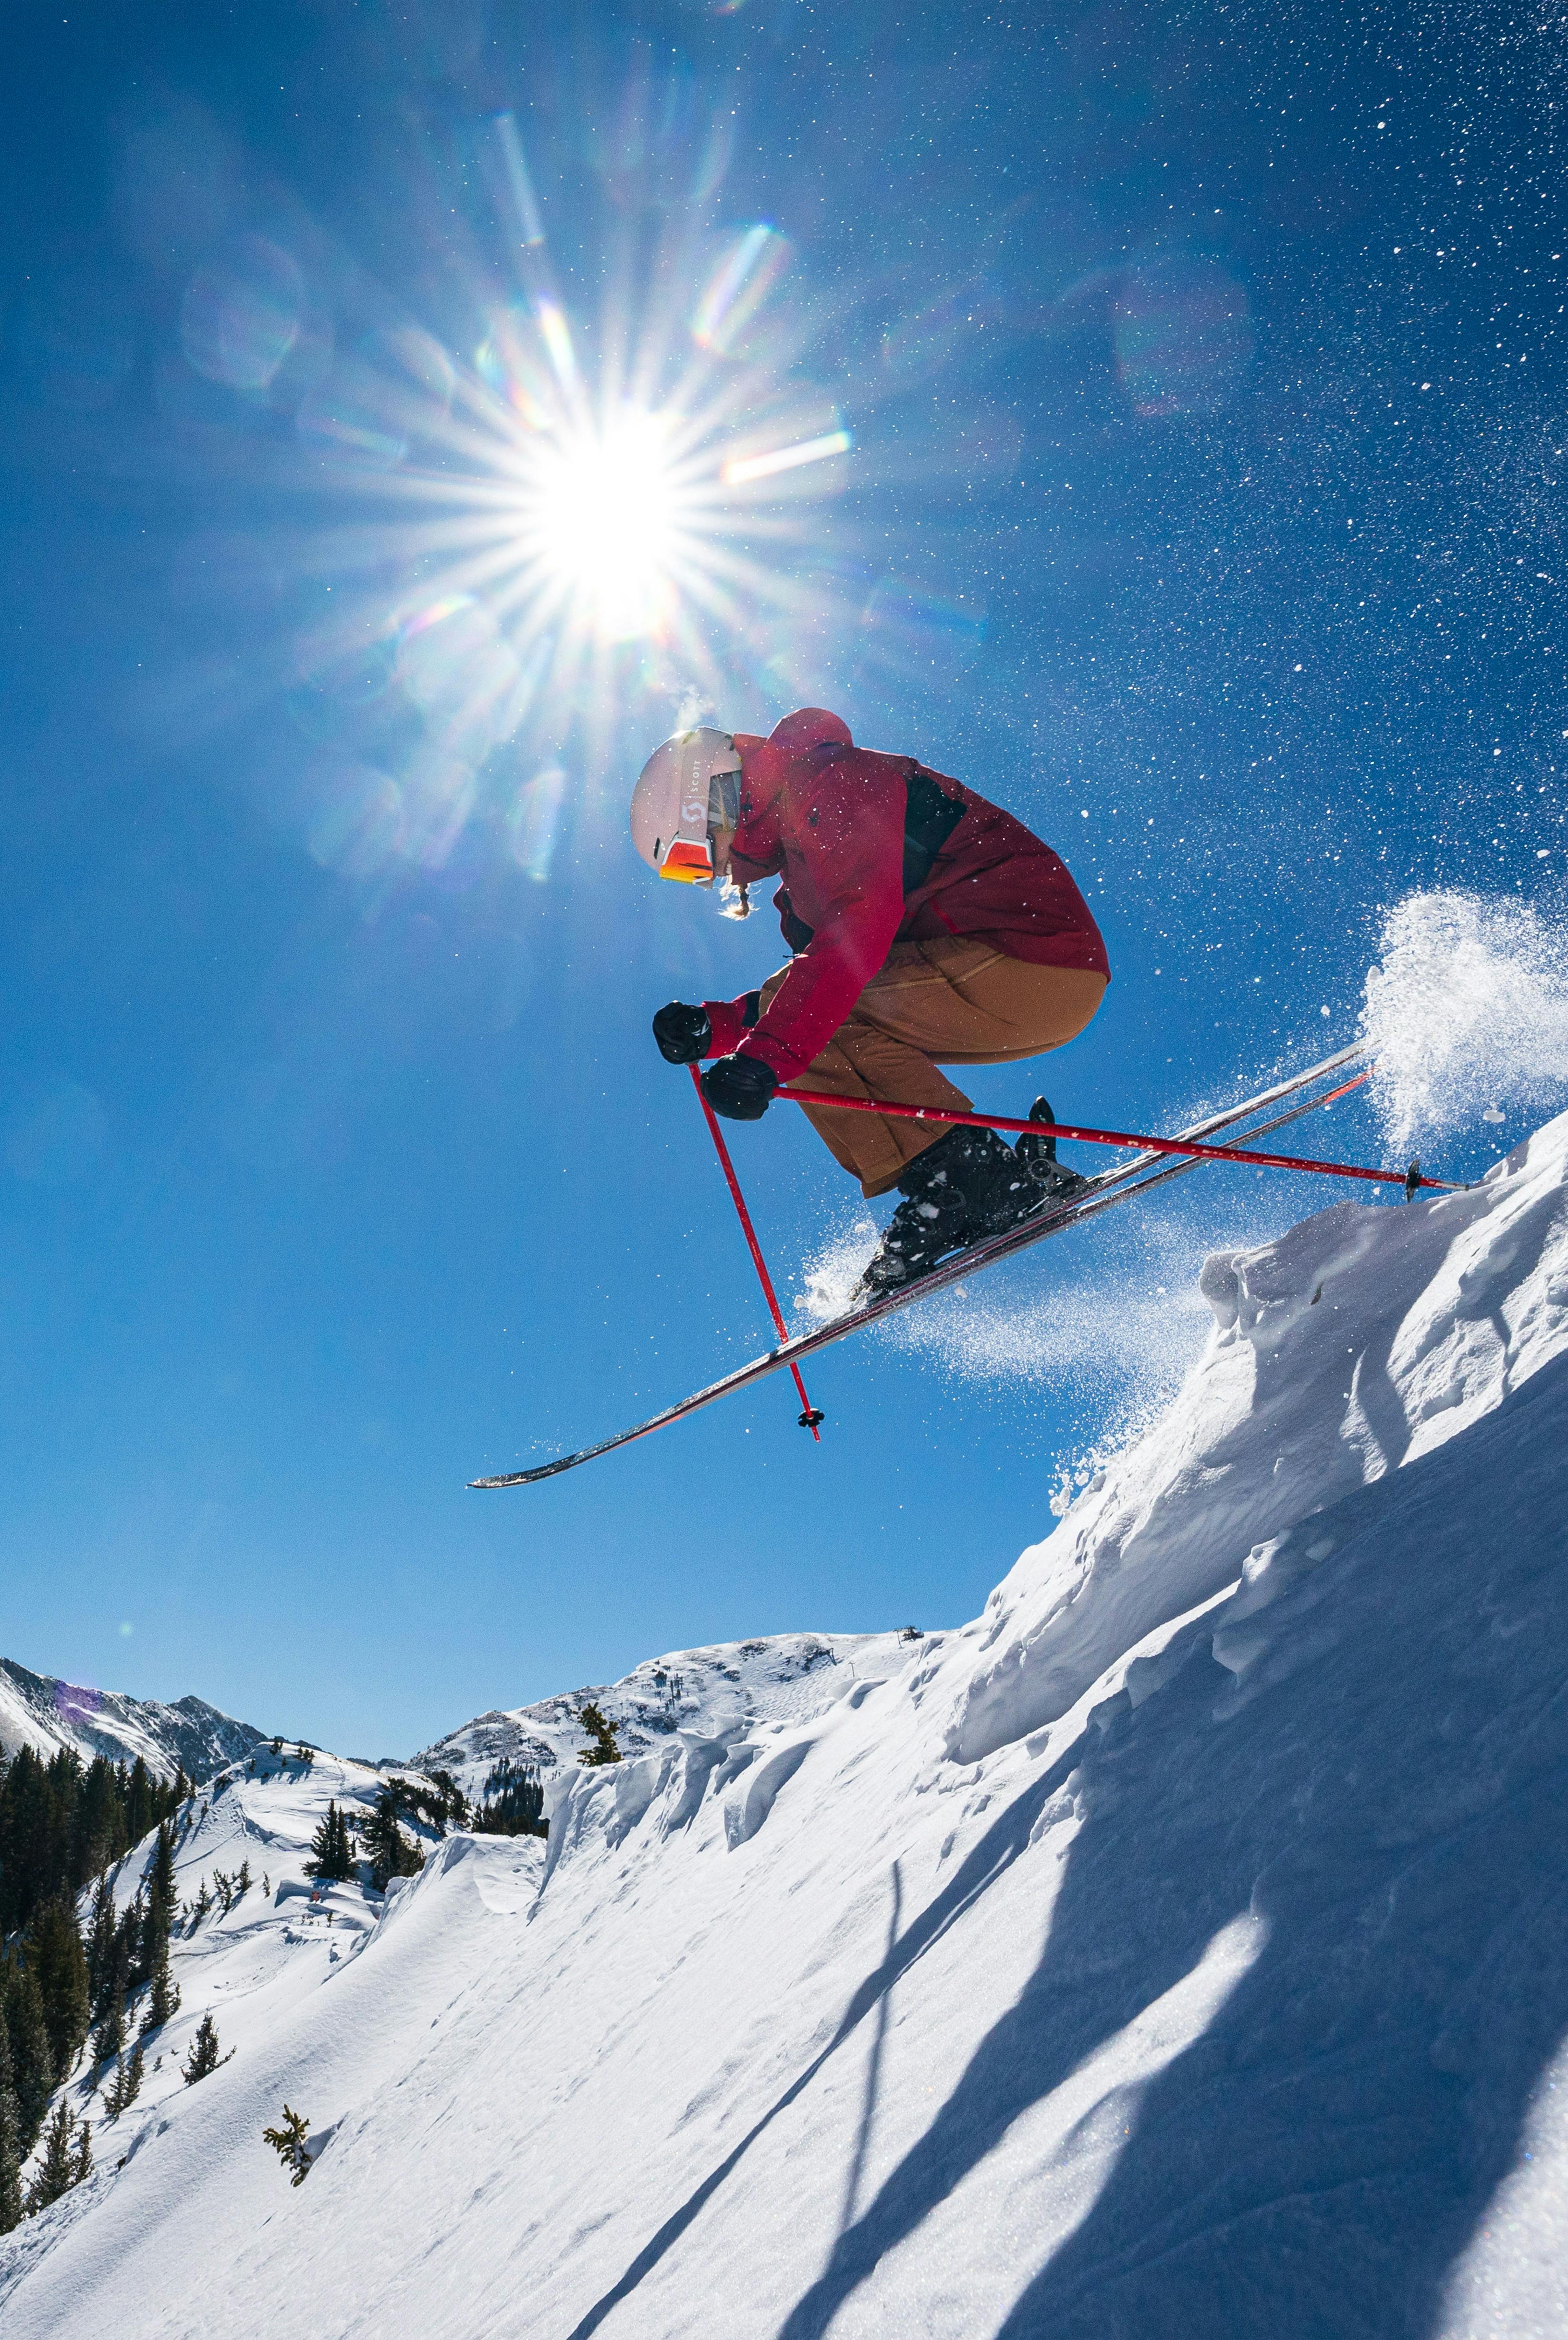 Skier catches air on a steep run at Taos Ski Valley